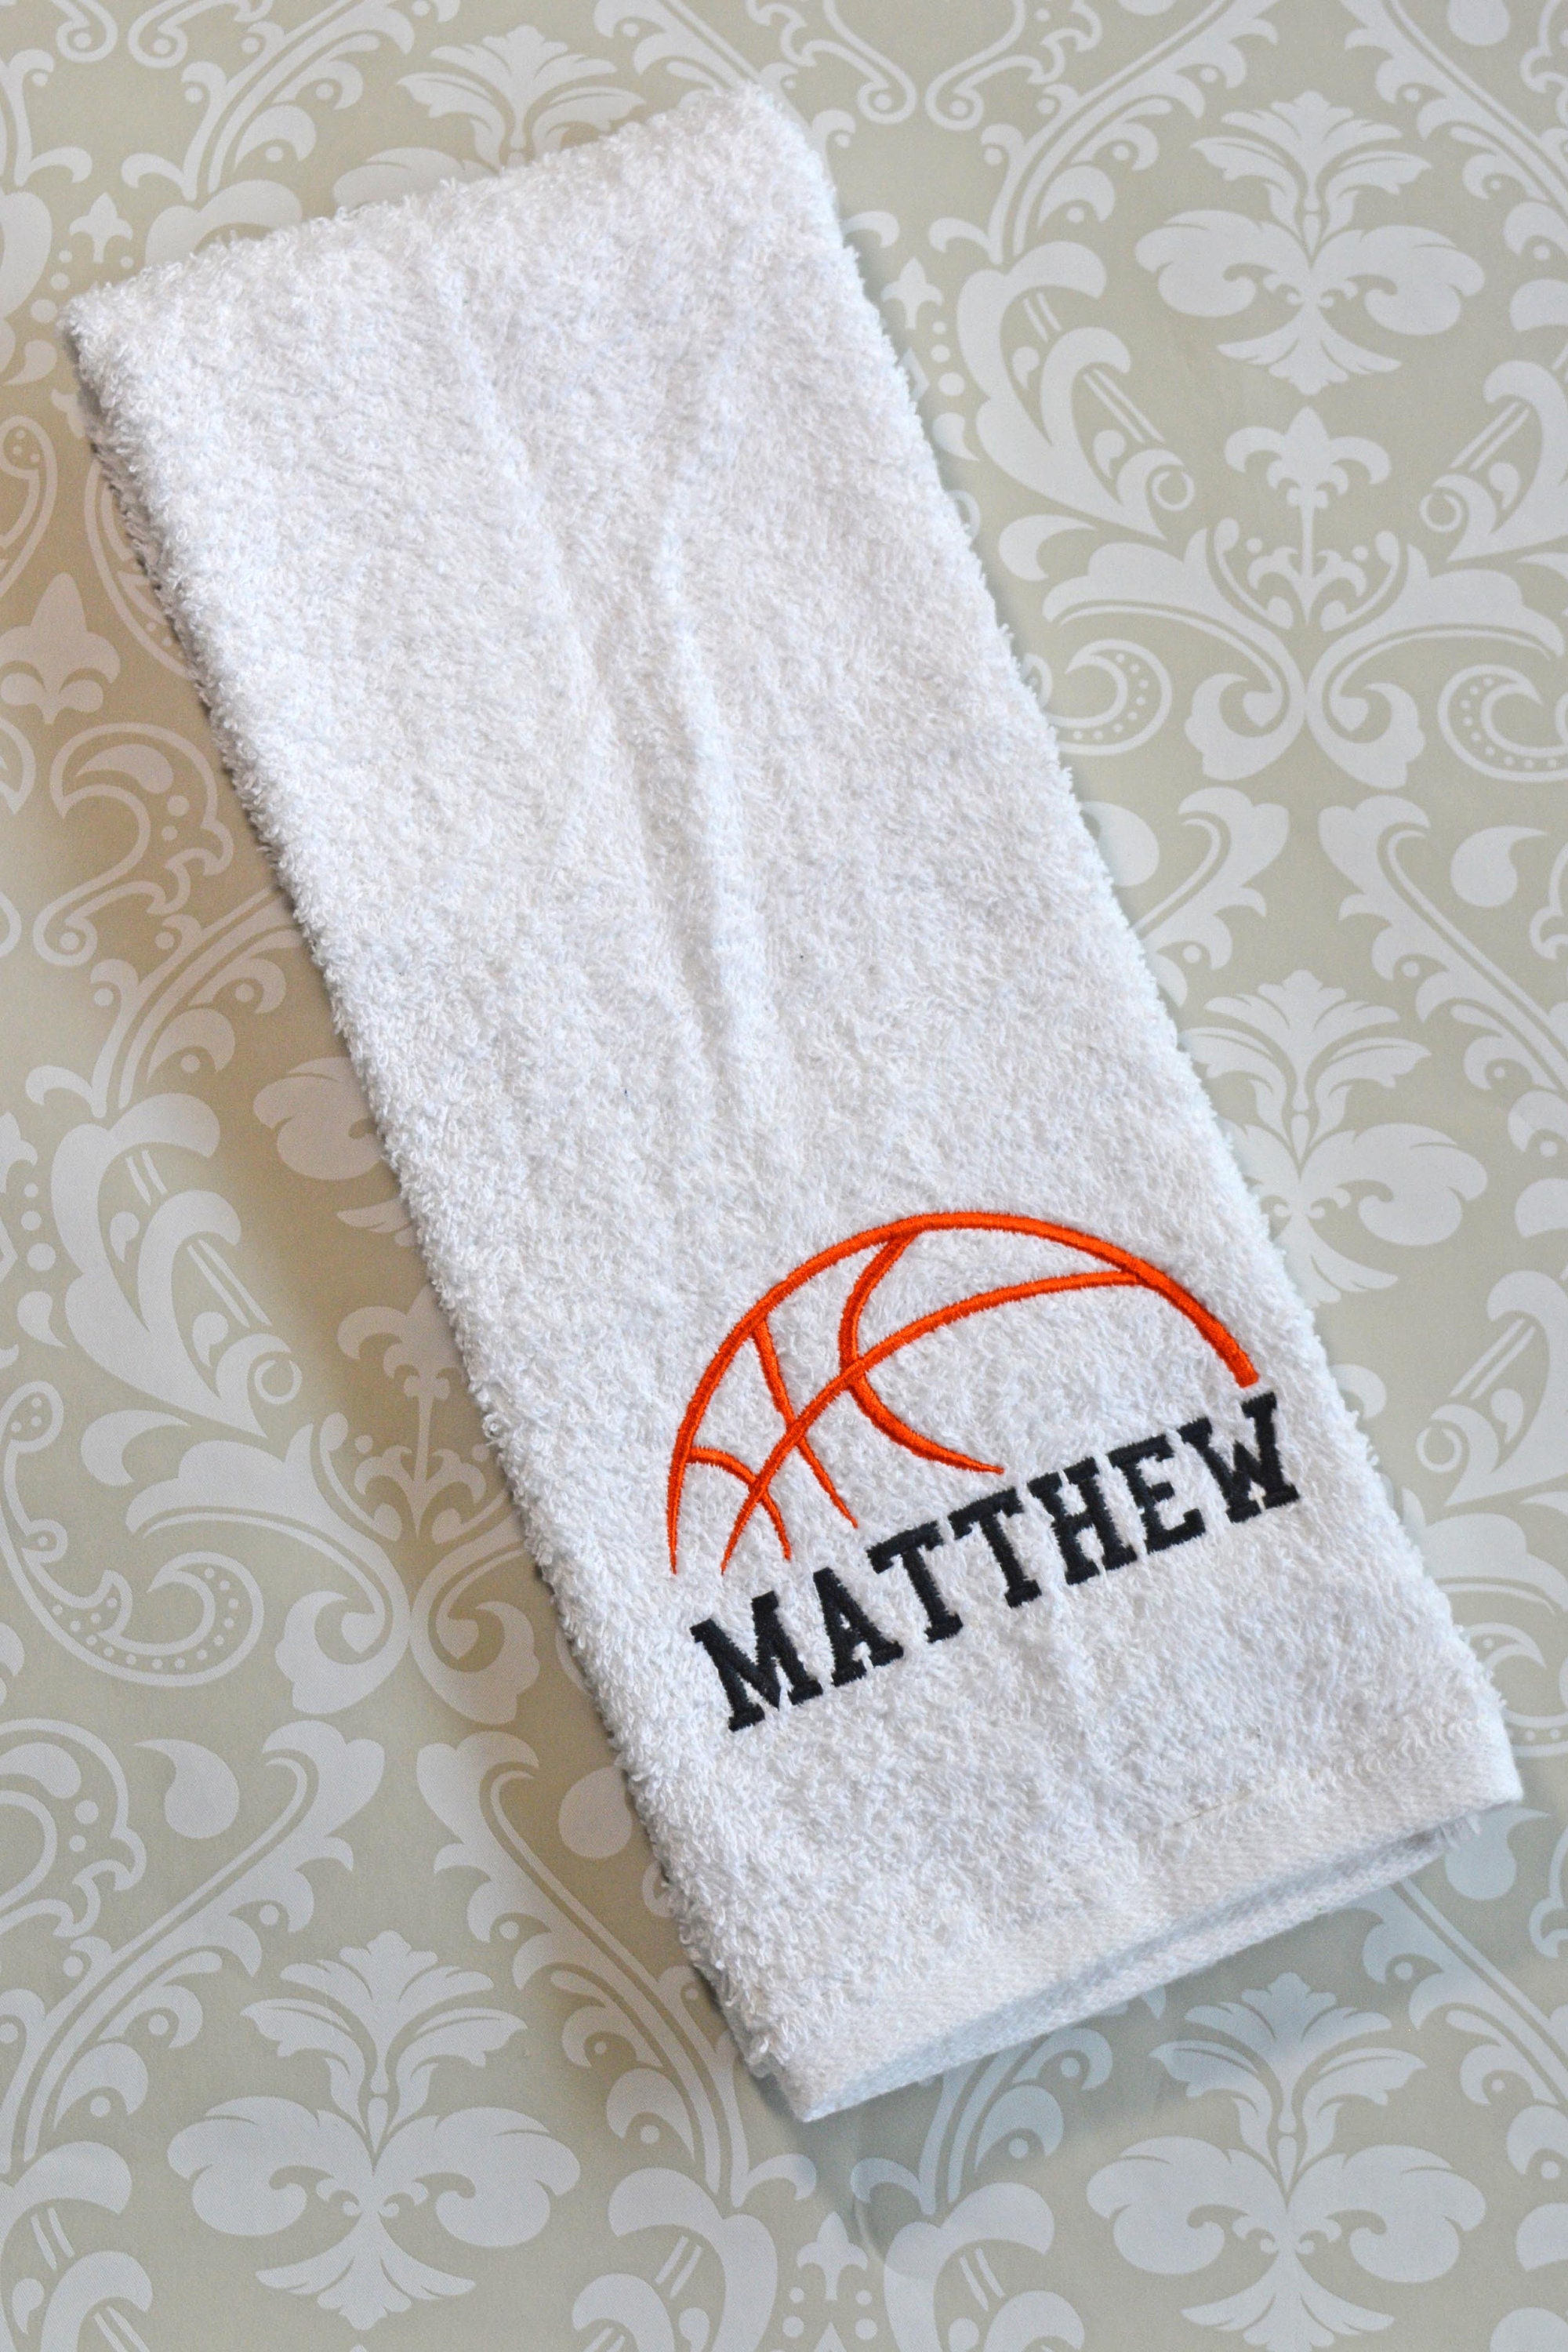 Basketball Beach Towel, Personalized Beach Towel Boys, Basketball